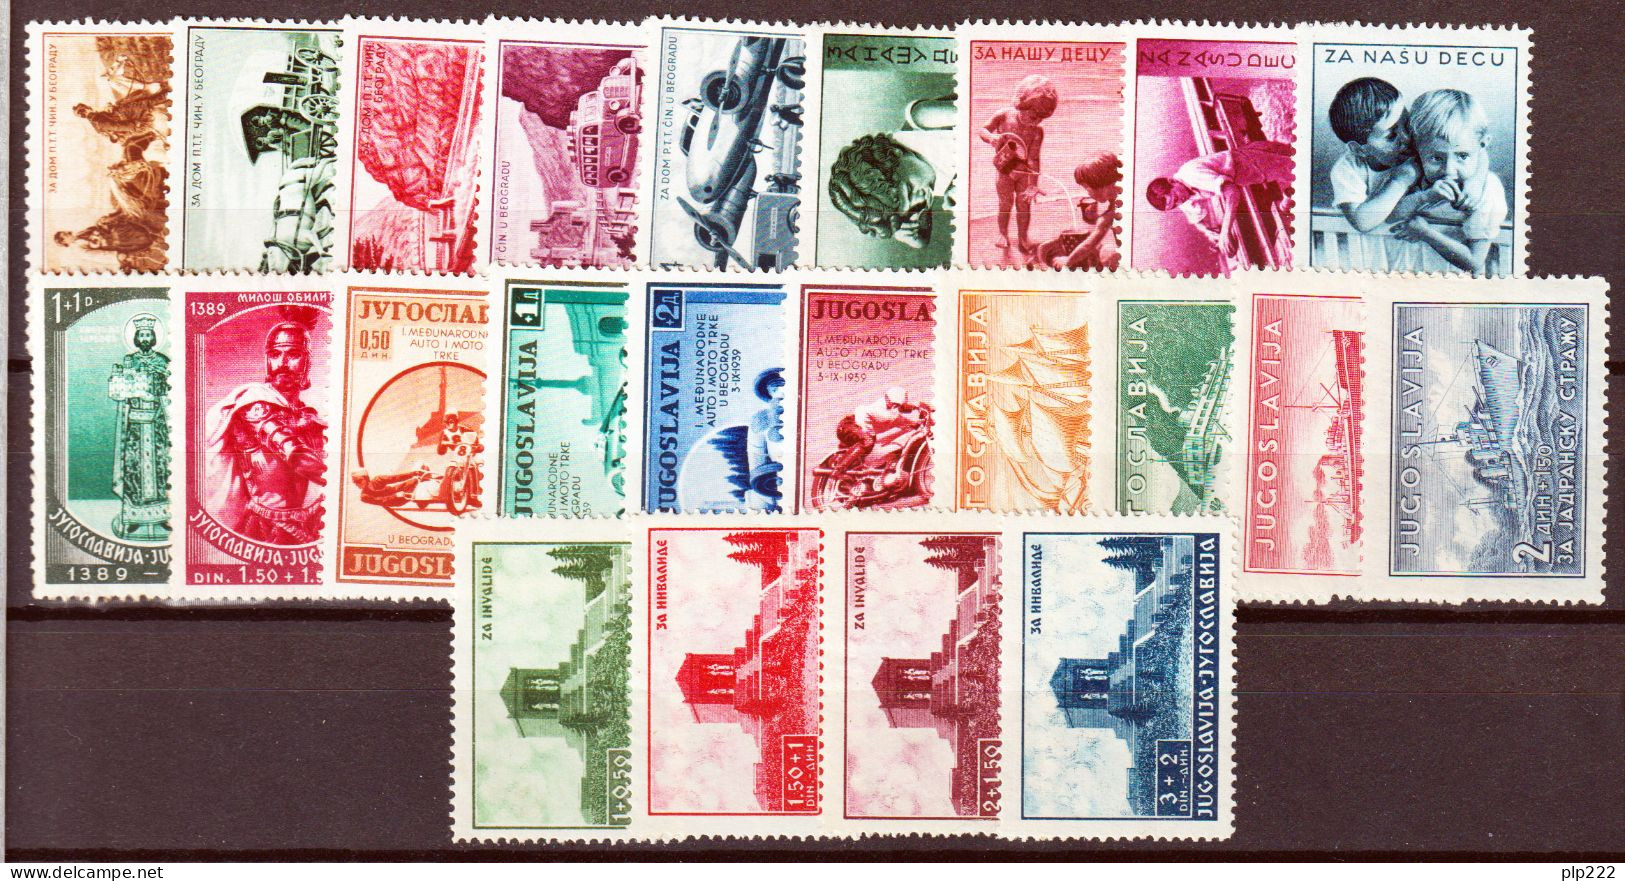 Jugoslavia 1939 Annata Completa Commemorativi / Complete Year Set Commemoratives **/MNH VF/F - Volledig Jaar